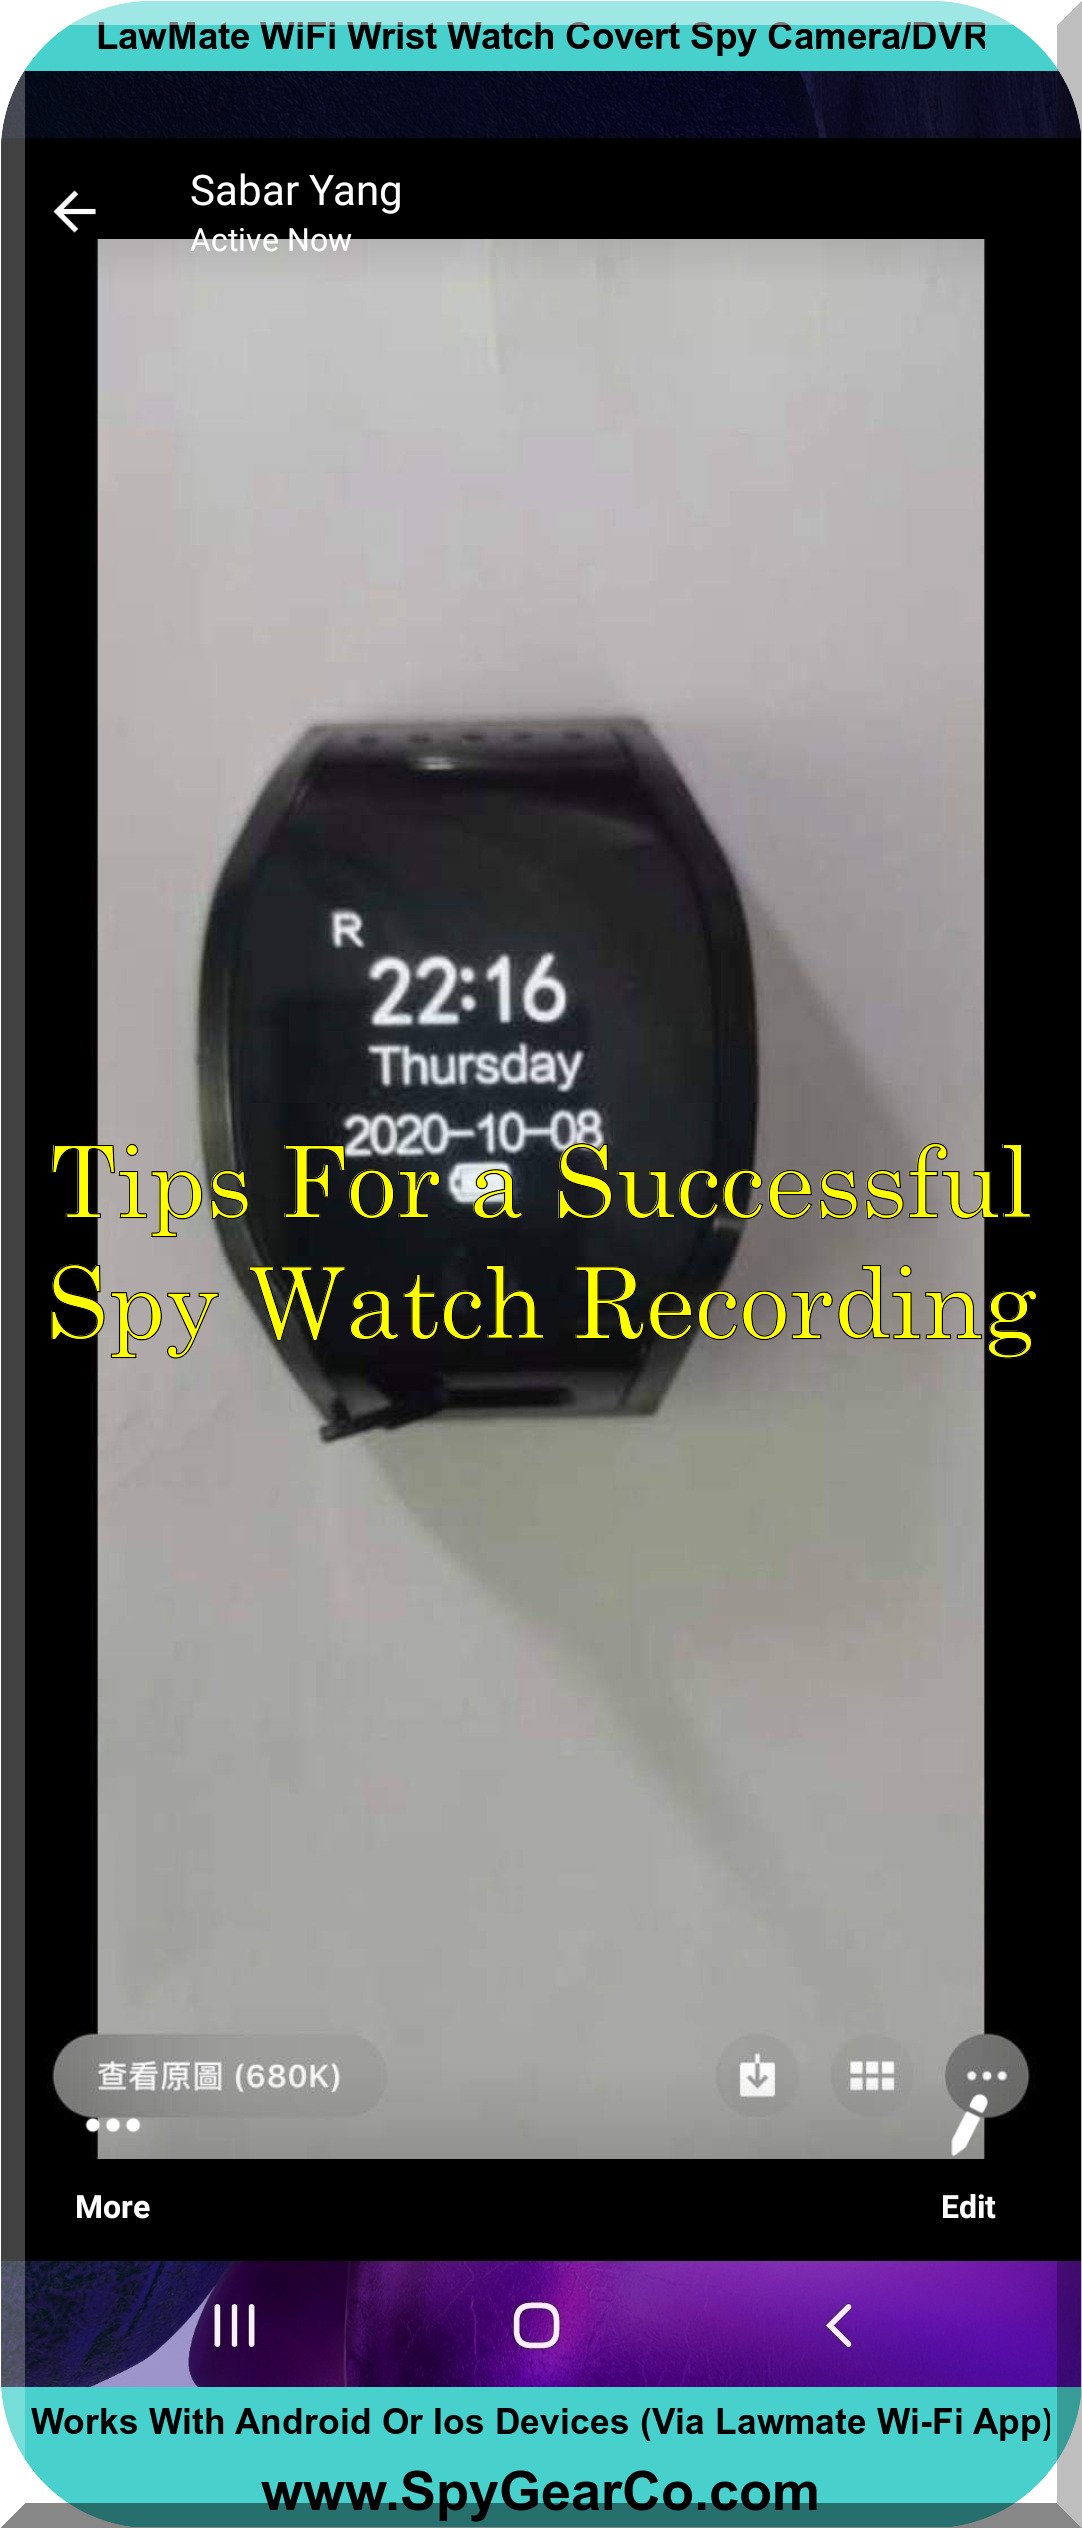 LawMate WiFi Wrist Watch Covert Spy Camera/DVR